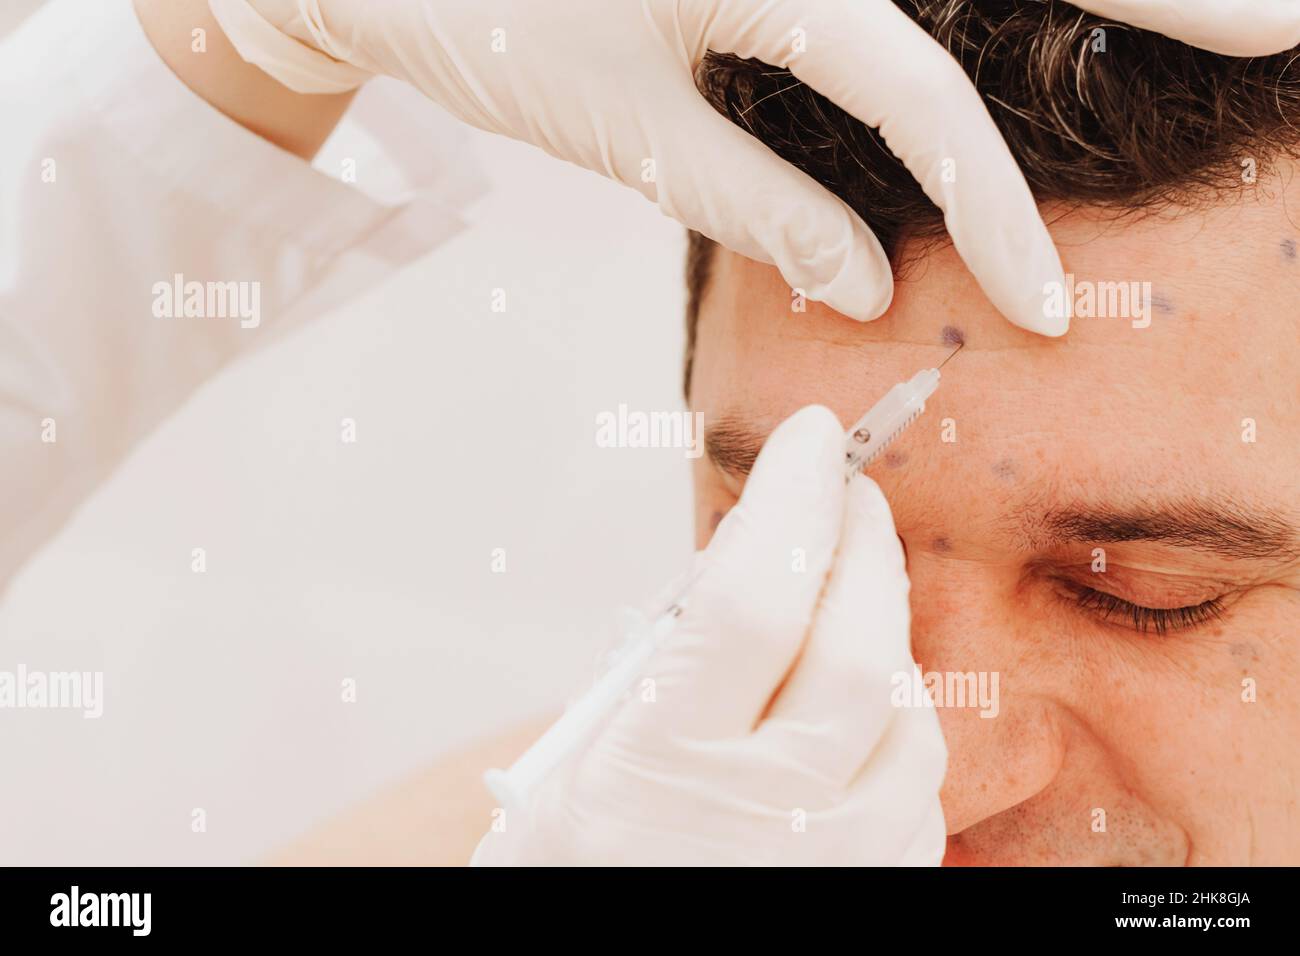 Cosmetologist conducts rejuvenation procedure puts Botox injection on man. The concept rejuvenating treatments Stock Photo